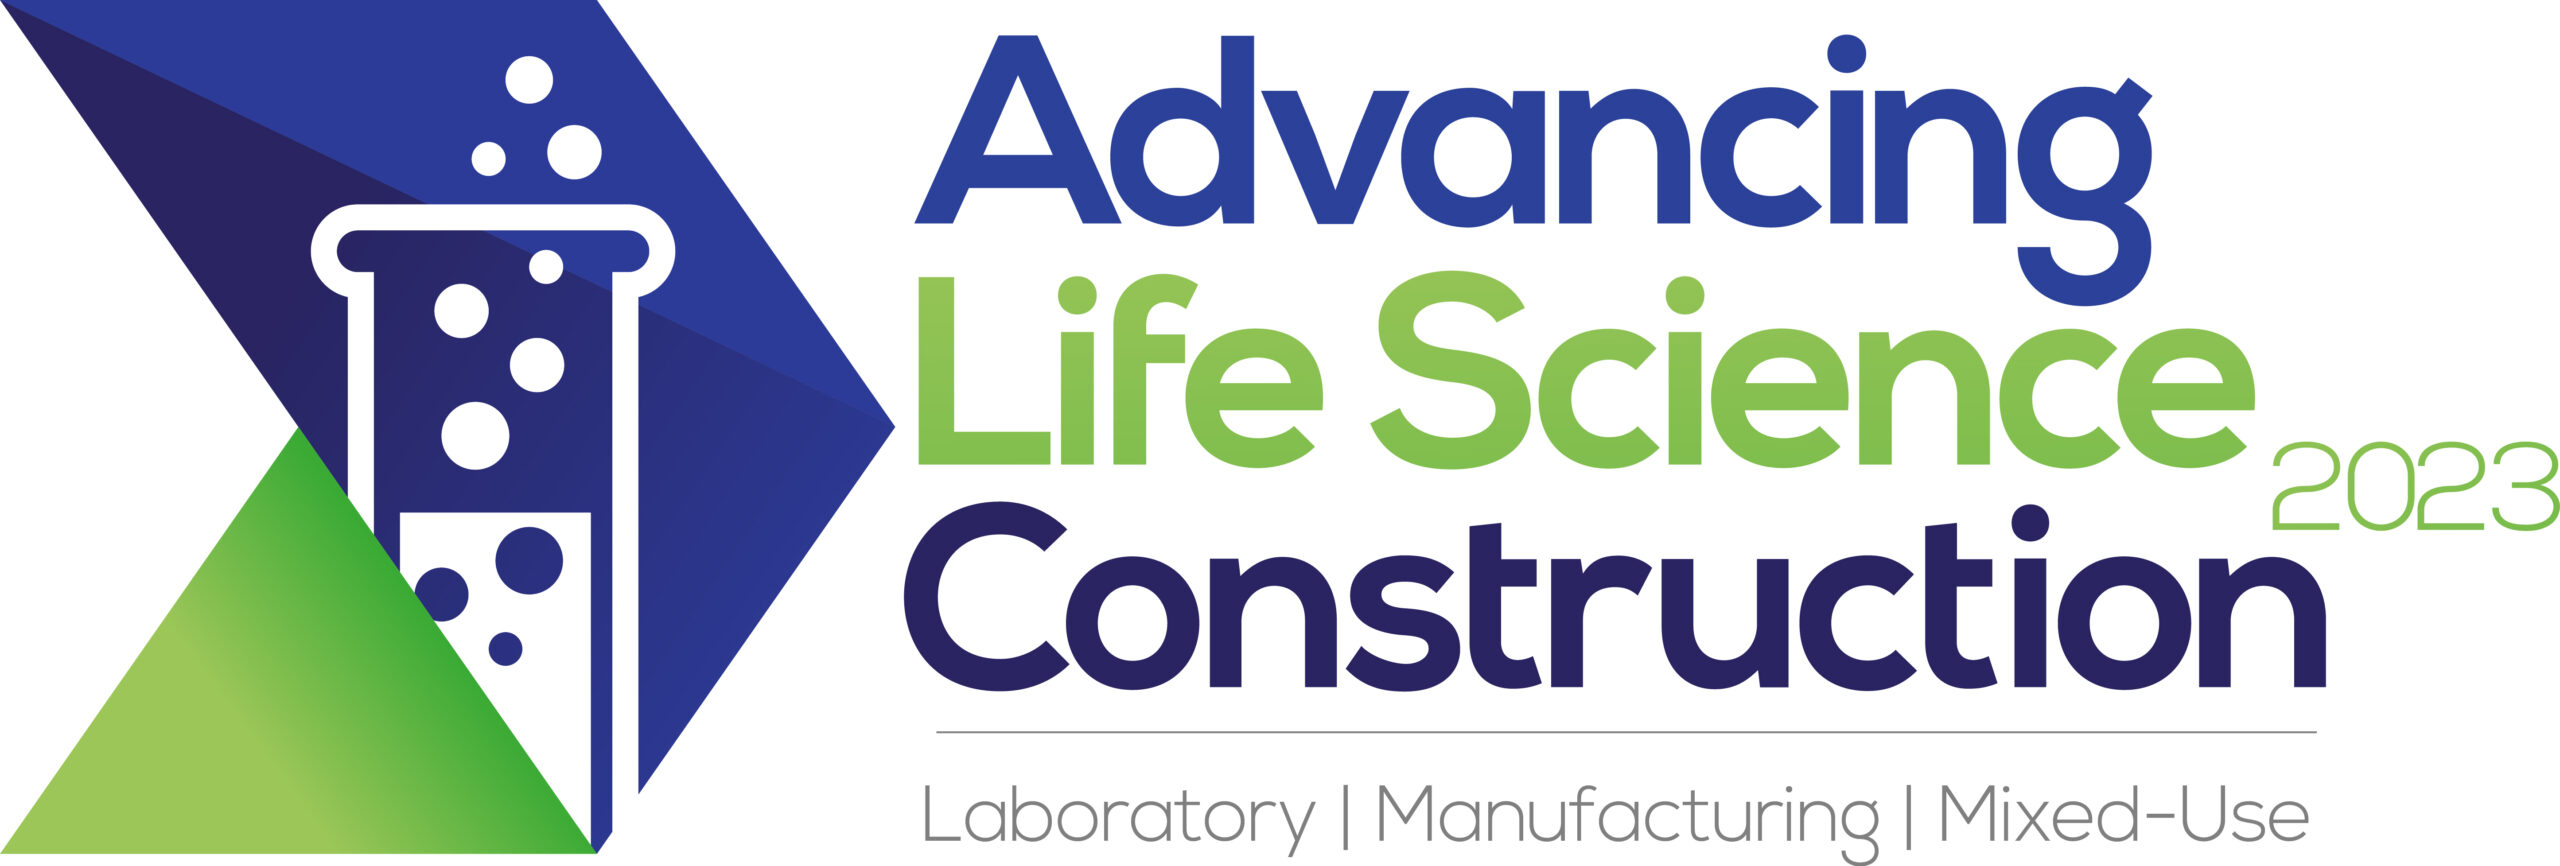 Advancing Life Science Design Construction_COL_STRAP